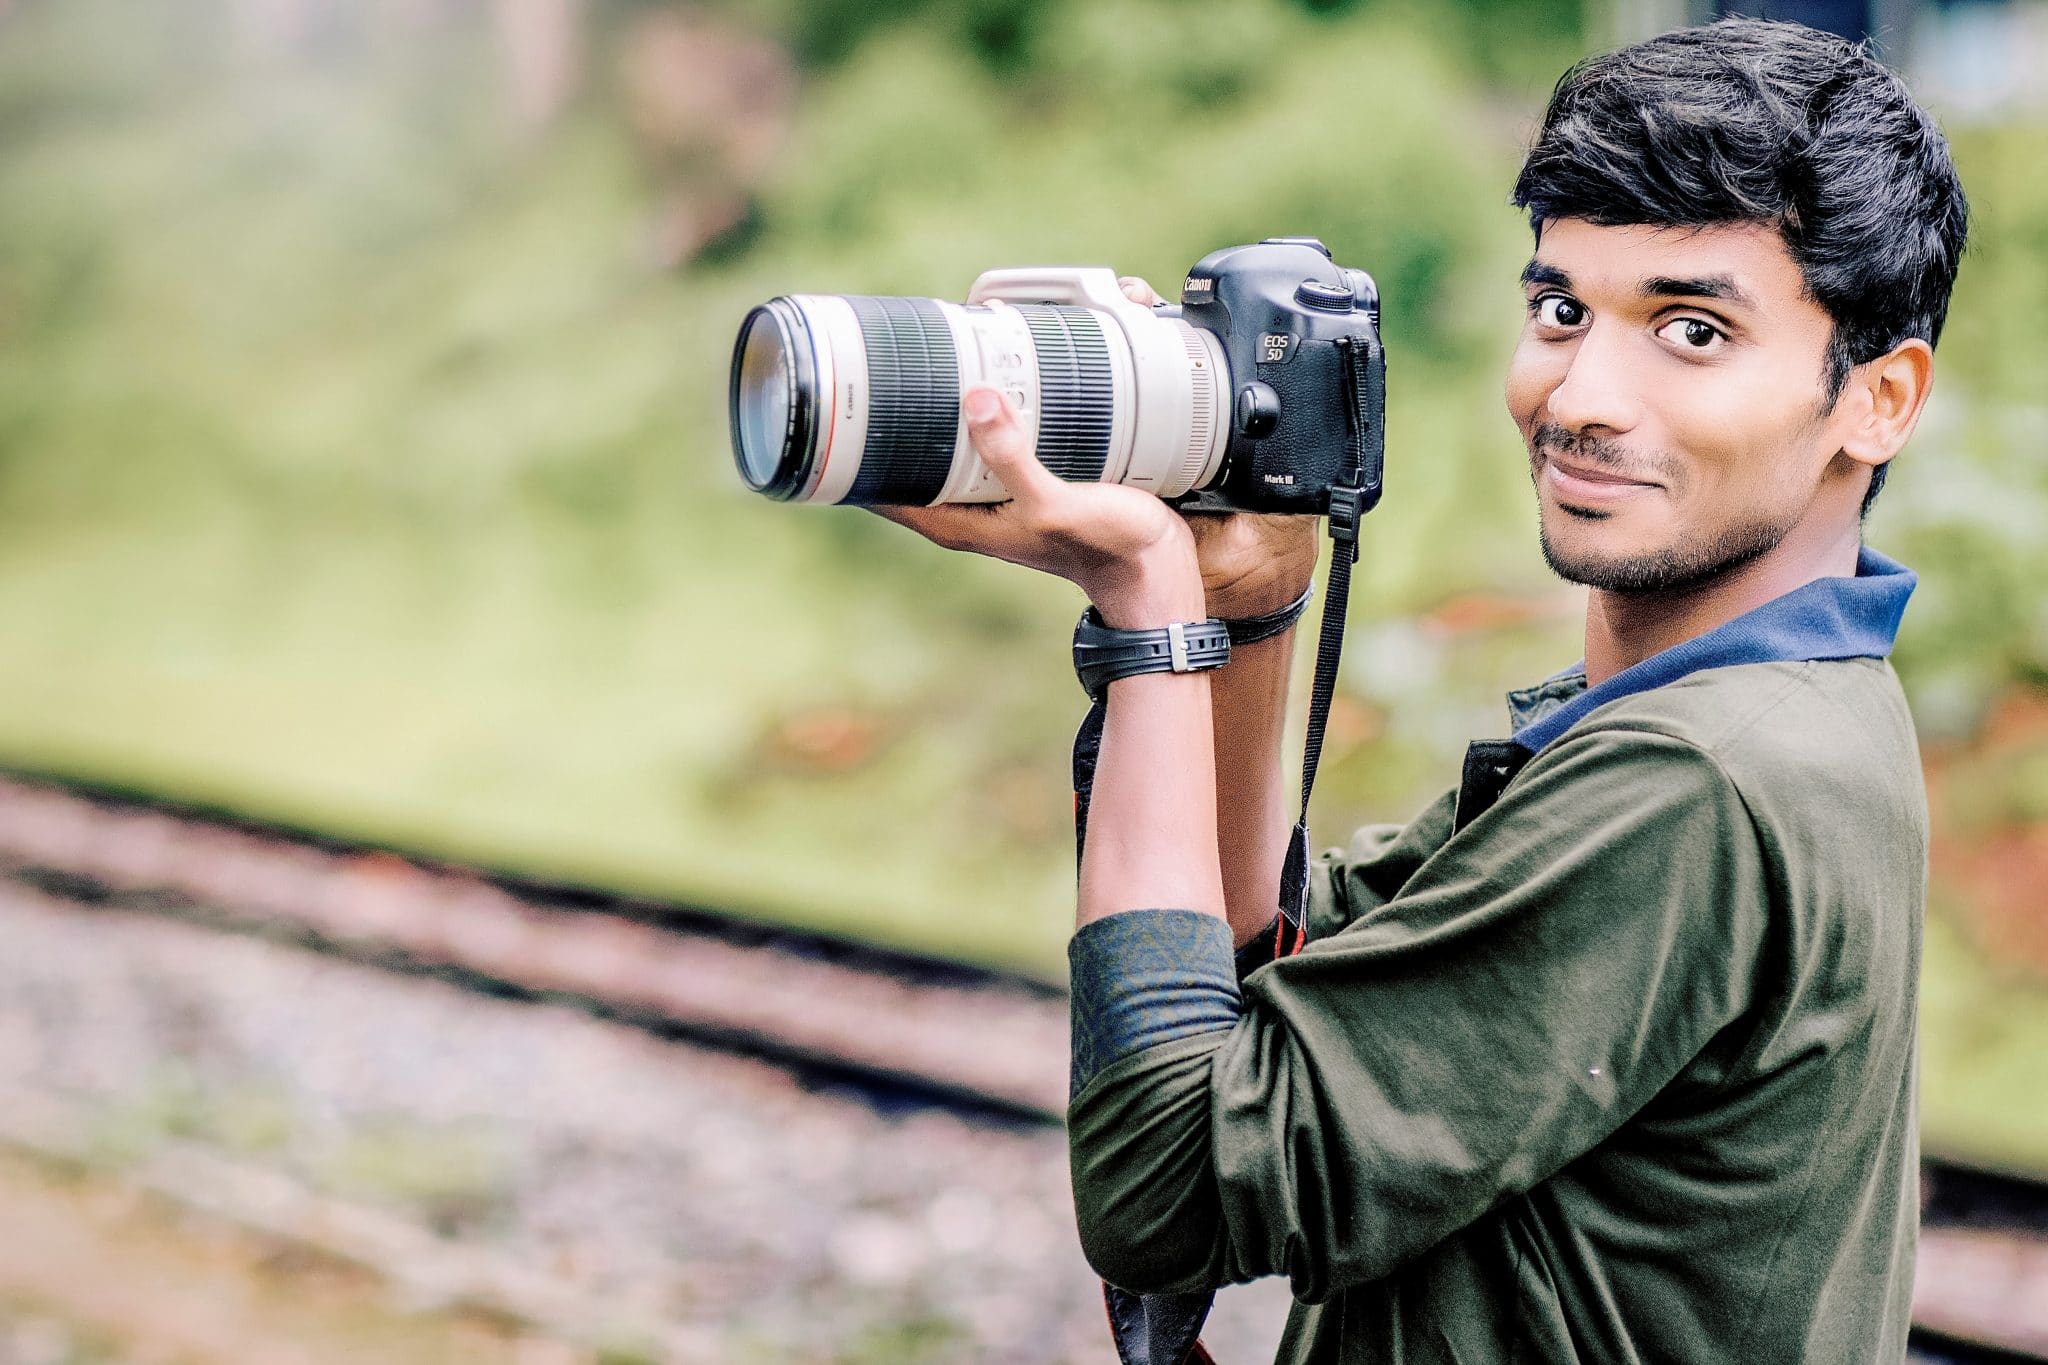 Cameras for amateur photographers